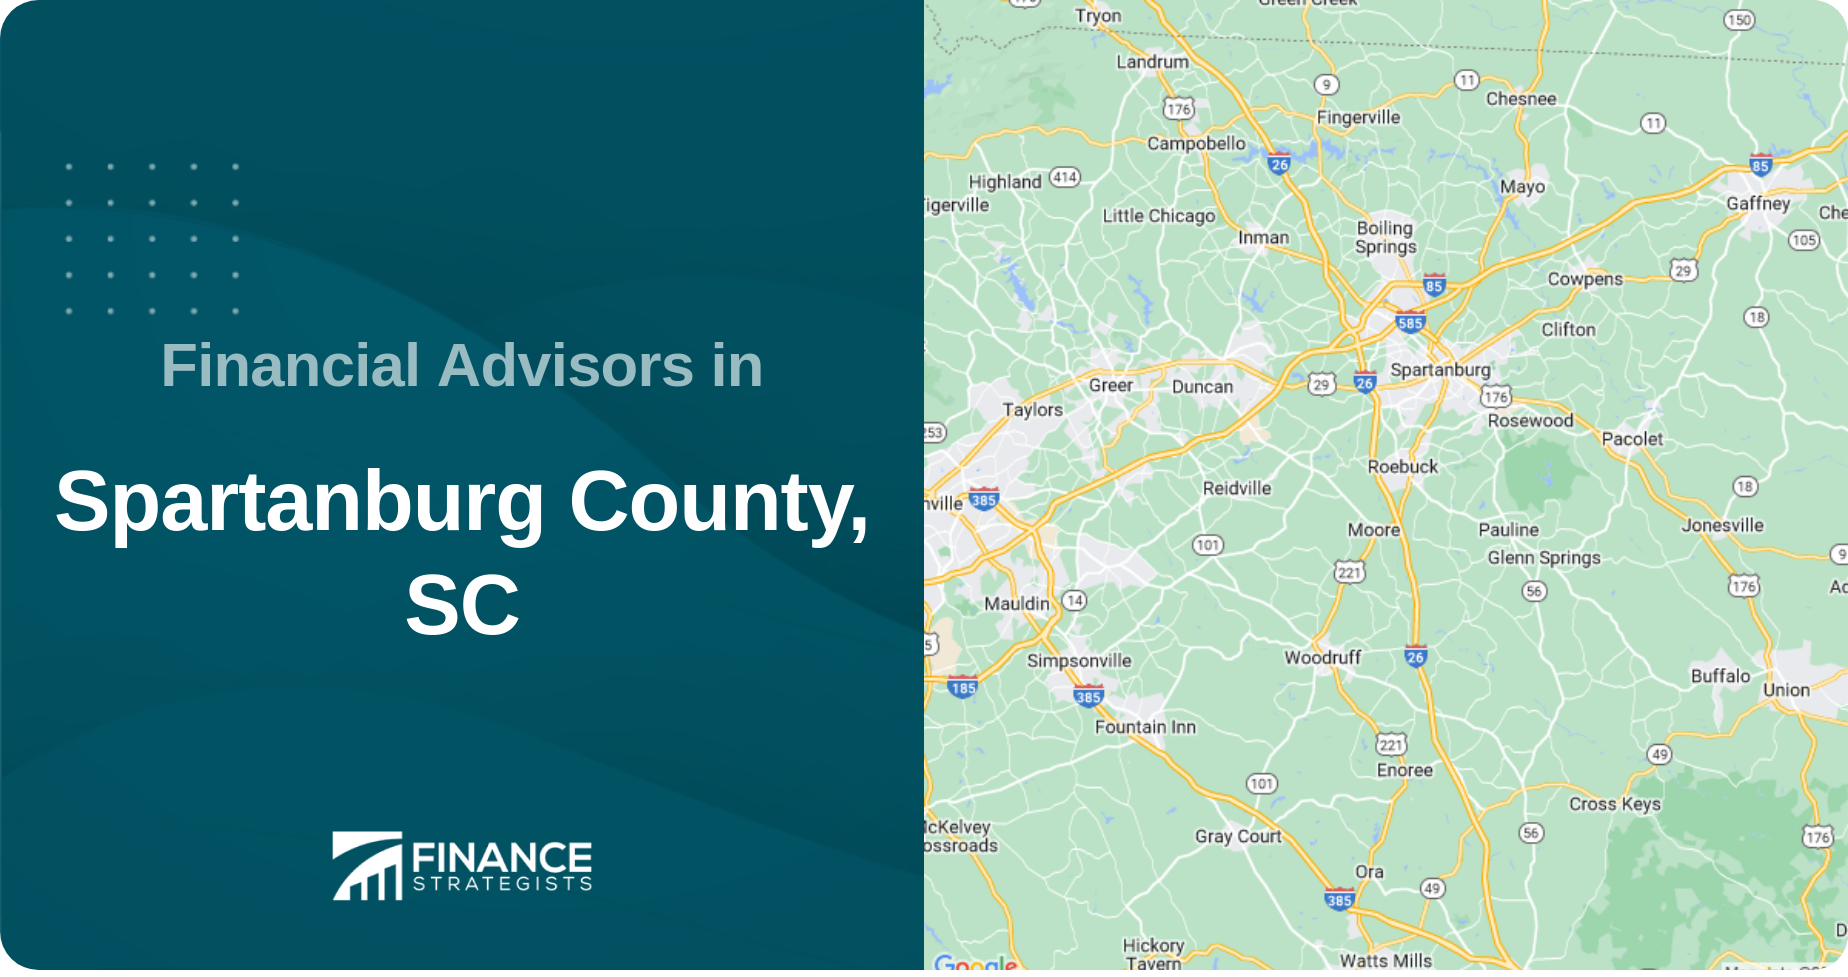 Financial Advisors in Spartanburg County, SC